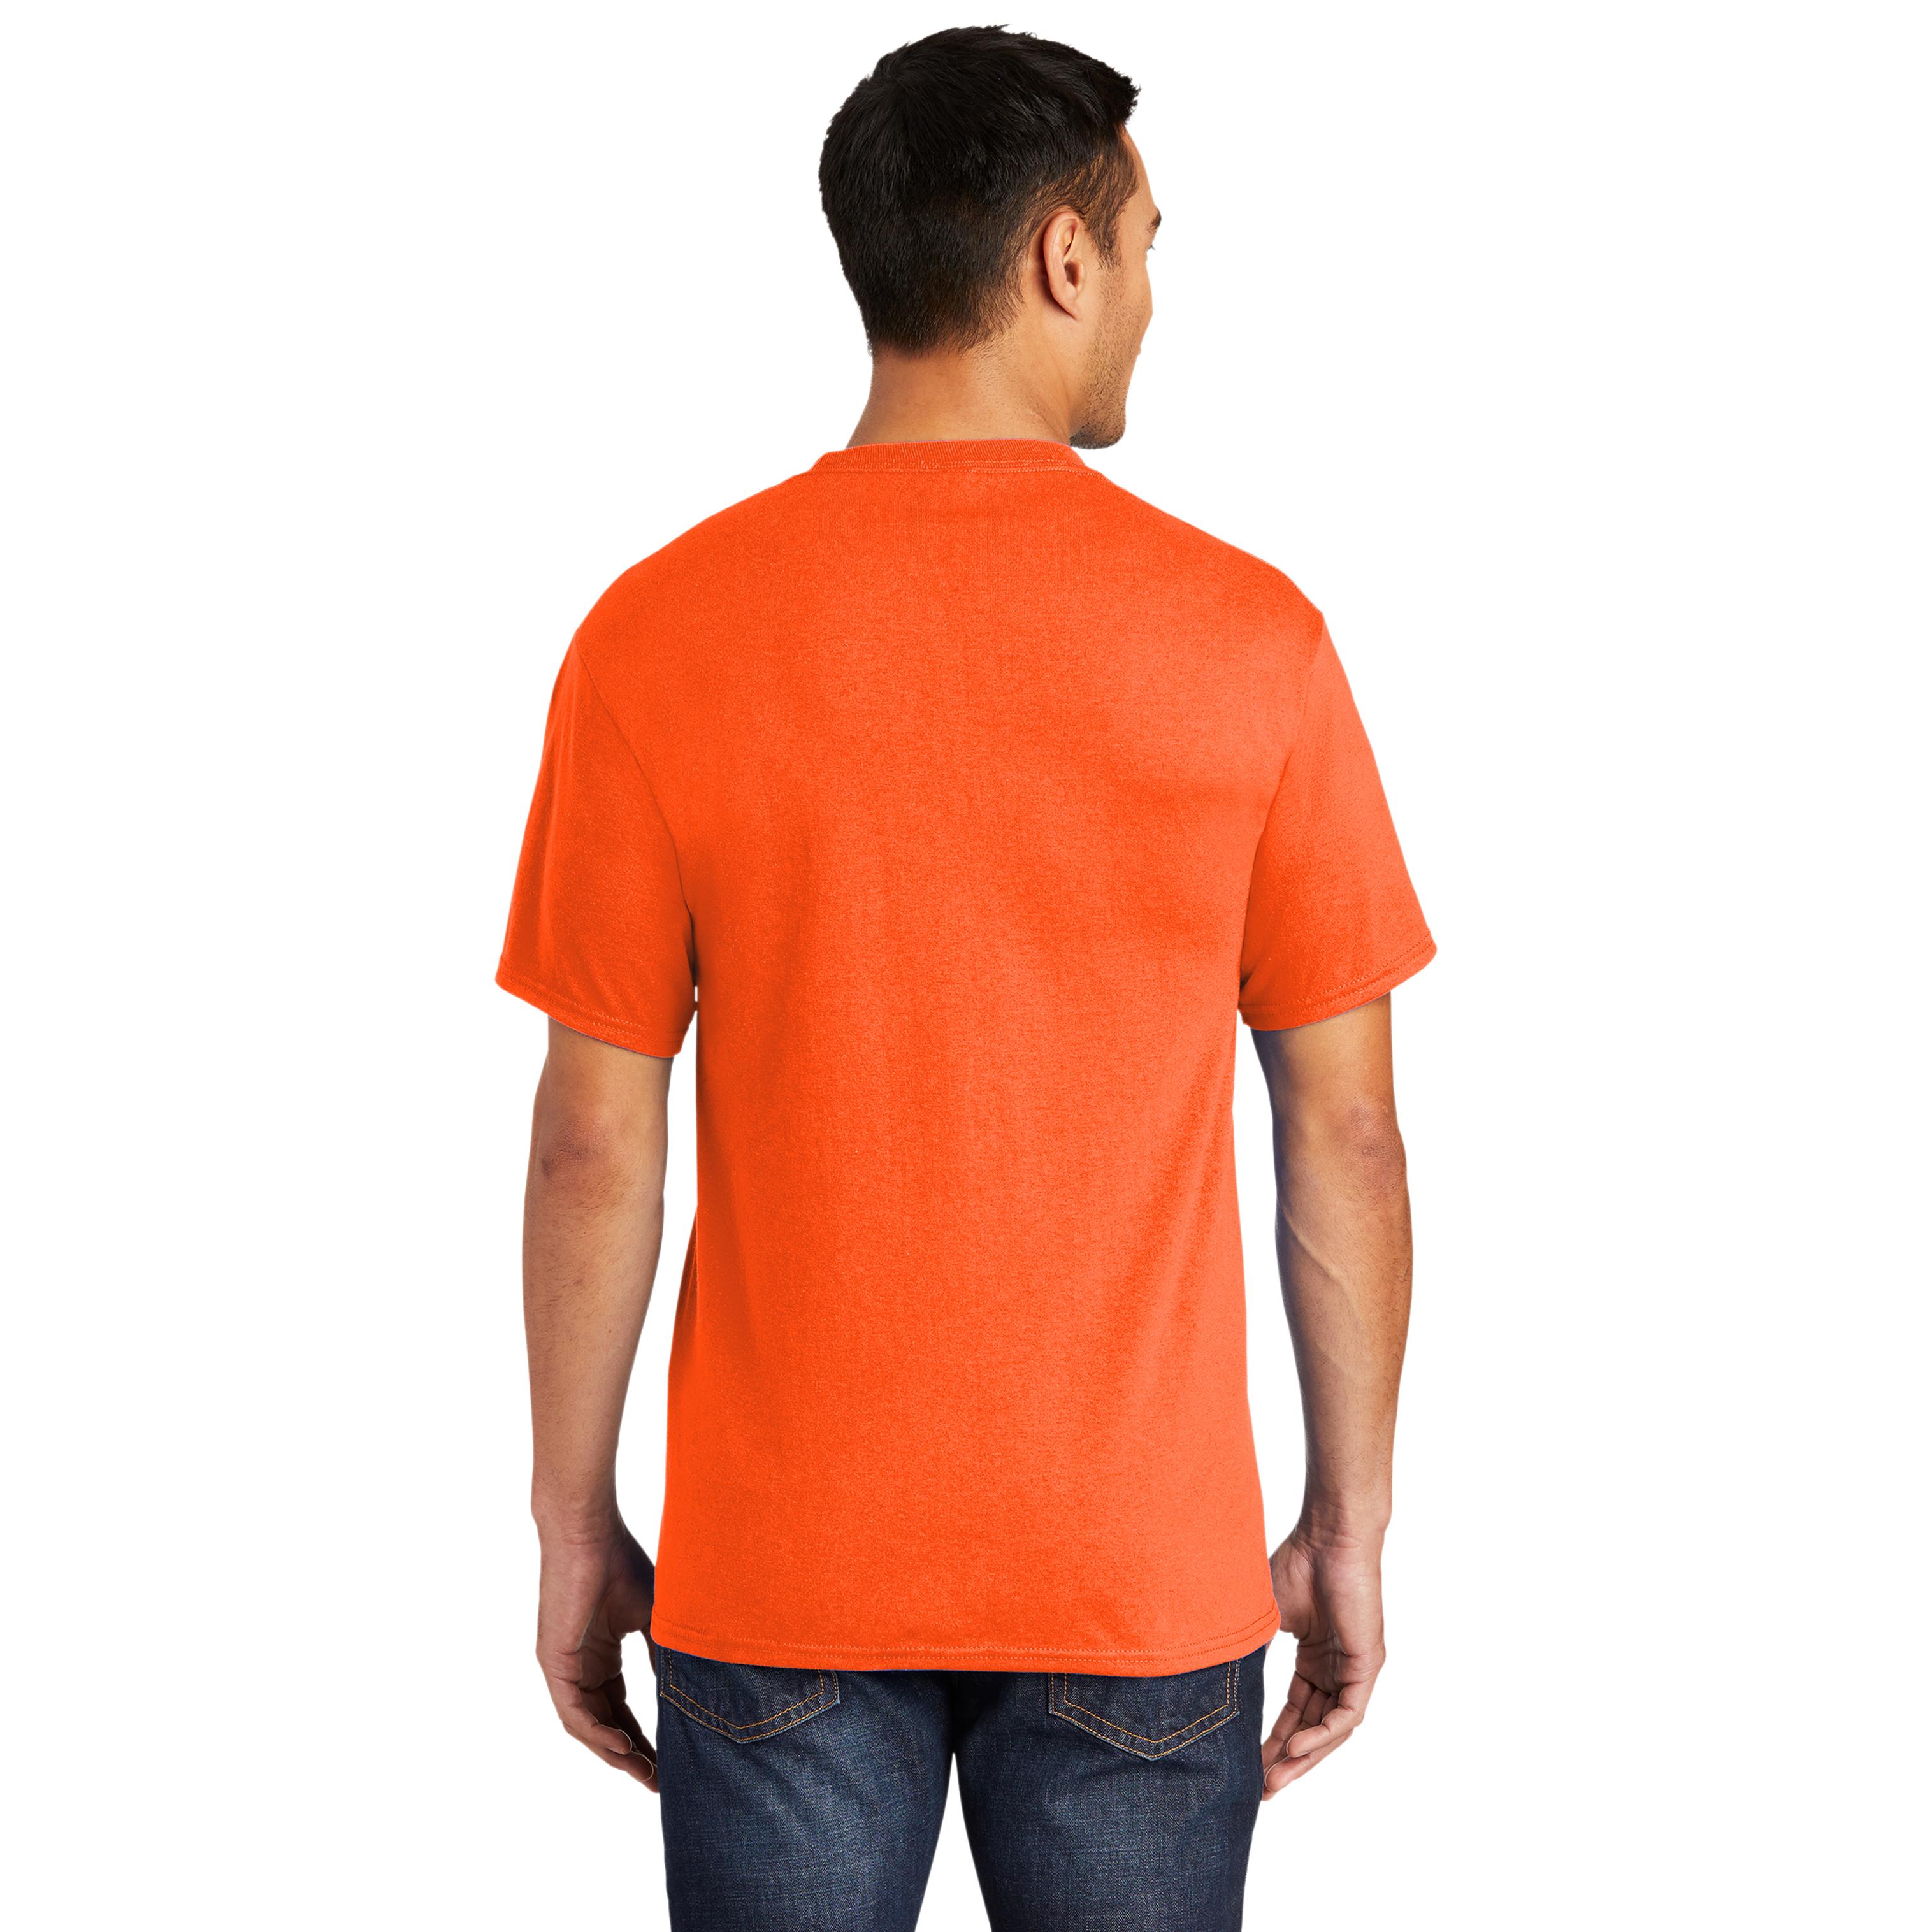 safety orange t shirt